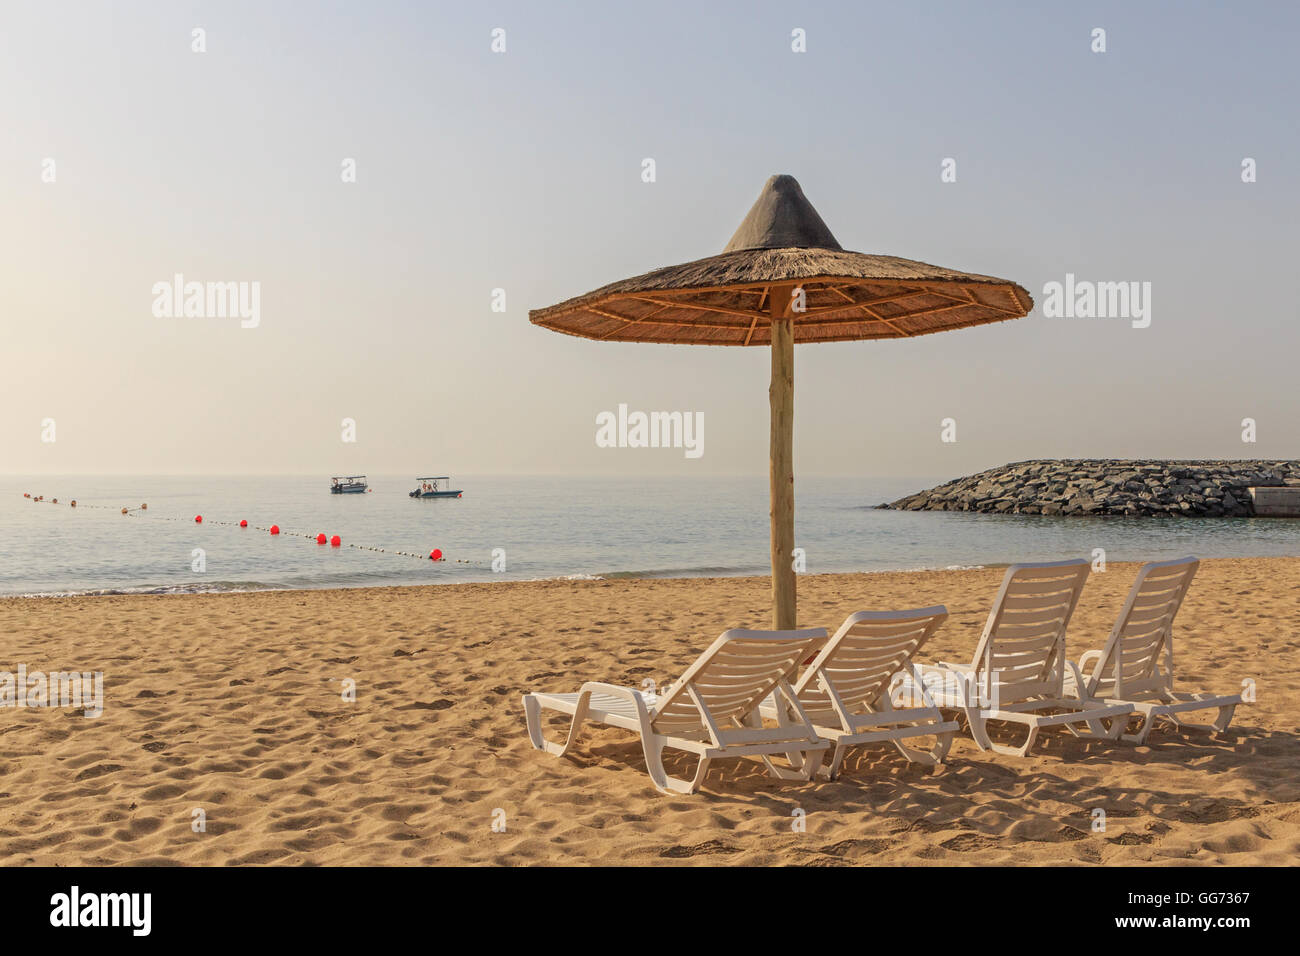 sunshade shelter and seats on beach in Fujairah Stock Photo